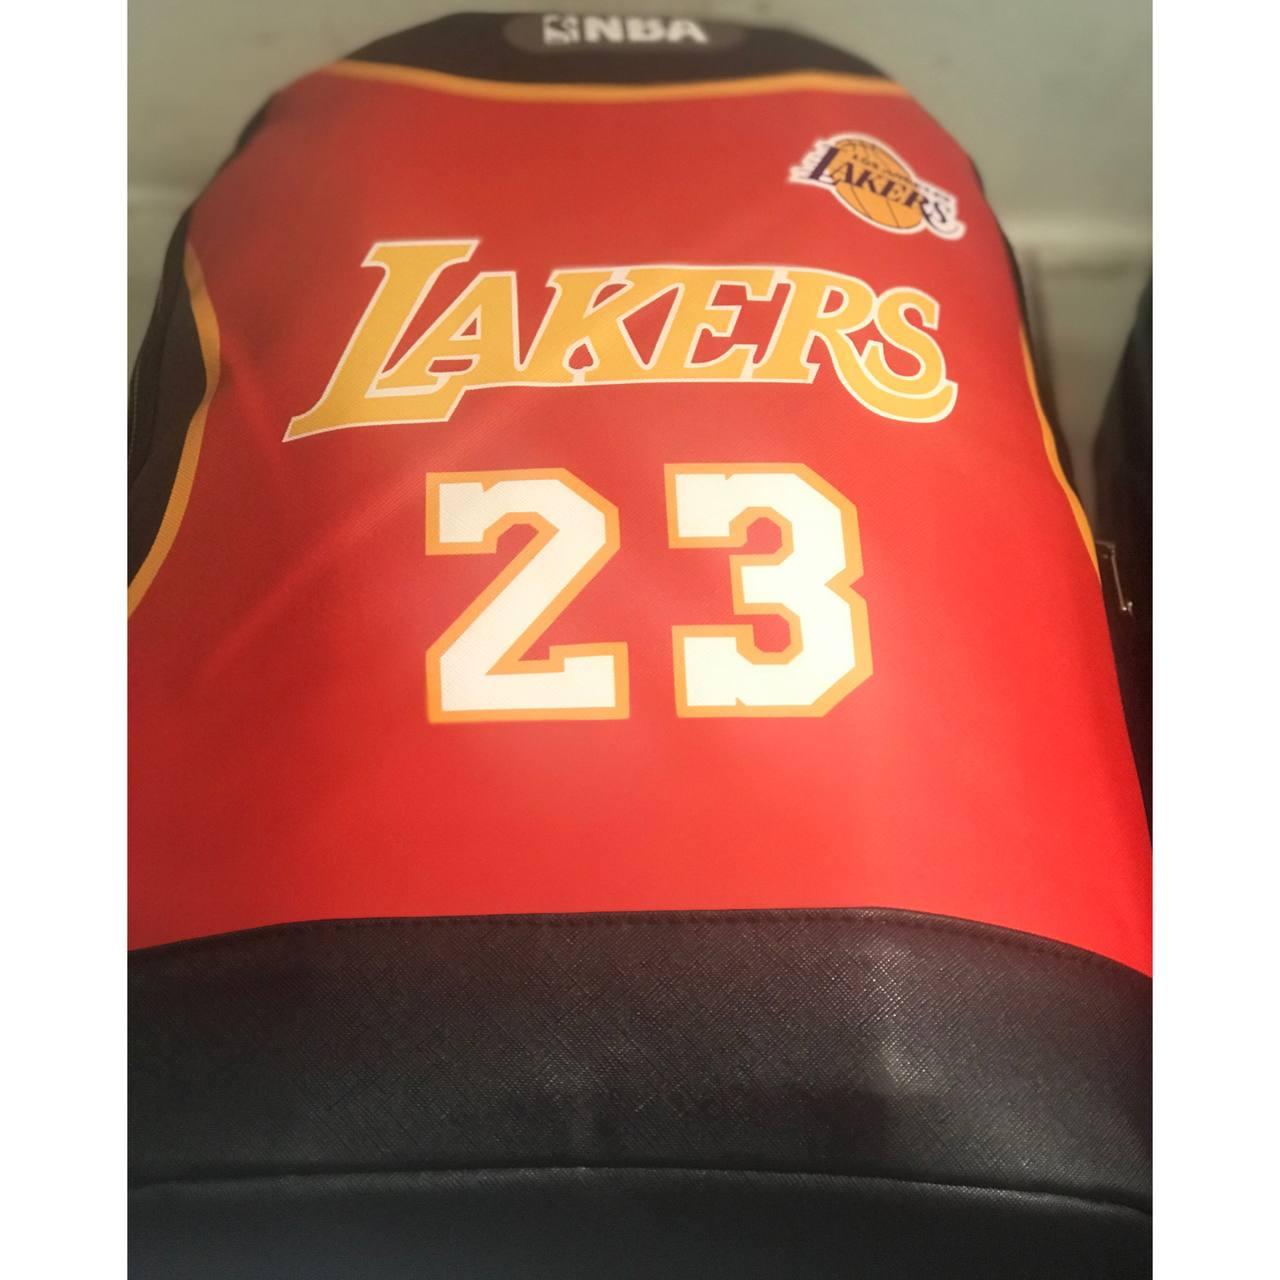 Lakers designer back bag